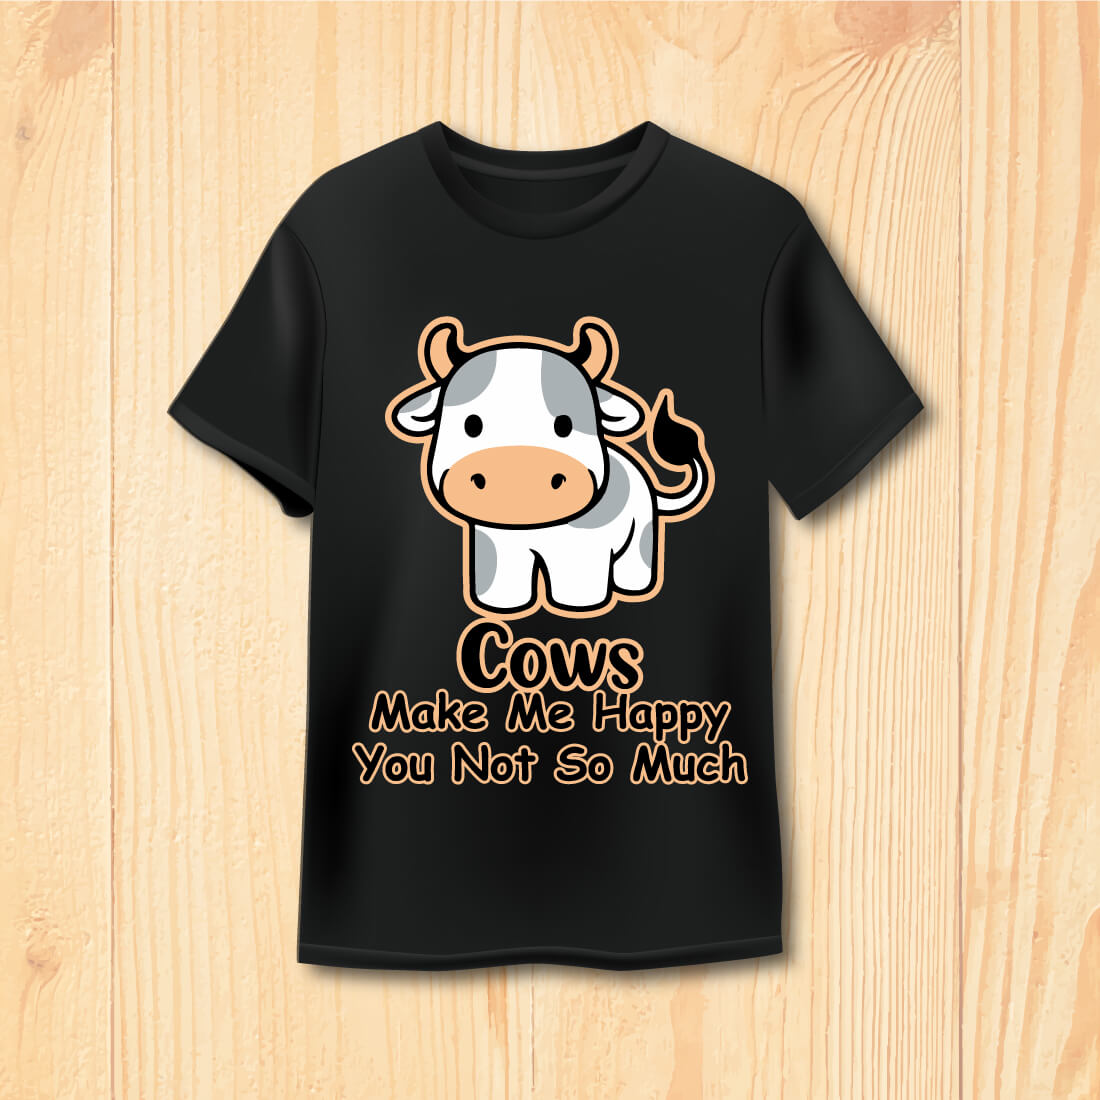 cow t shirt design 596